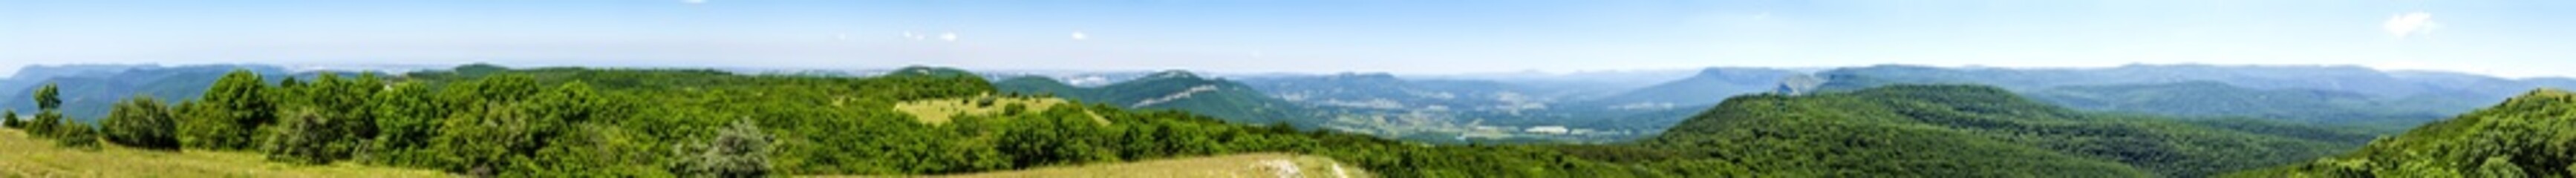 beautiful mountain panorama - 145002004